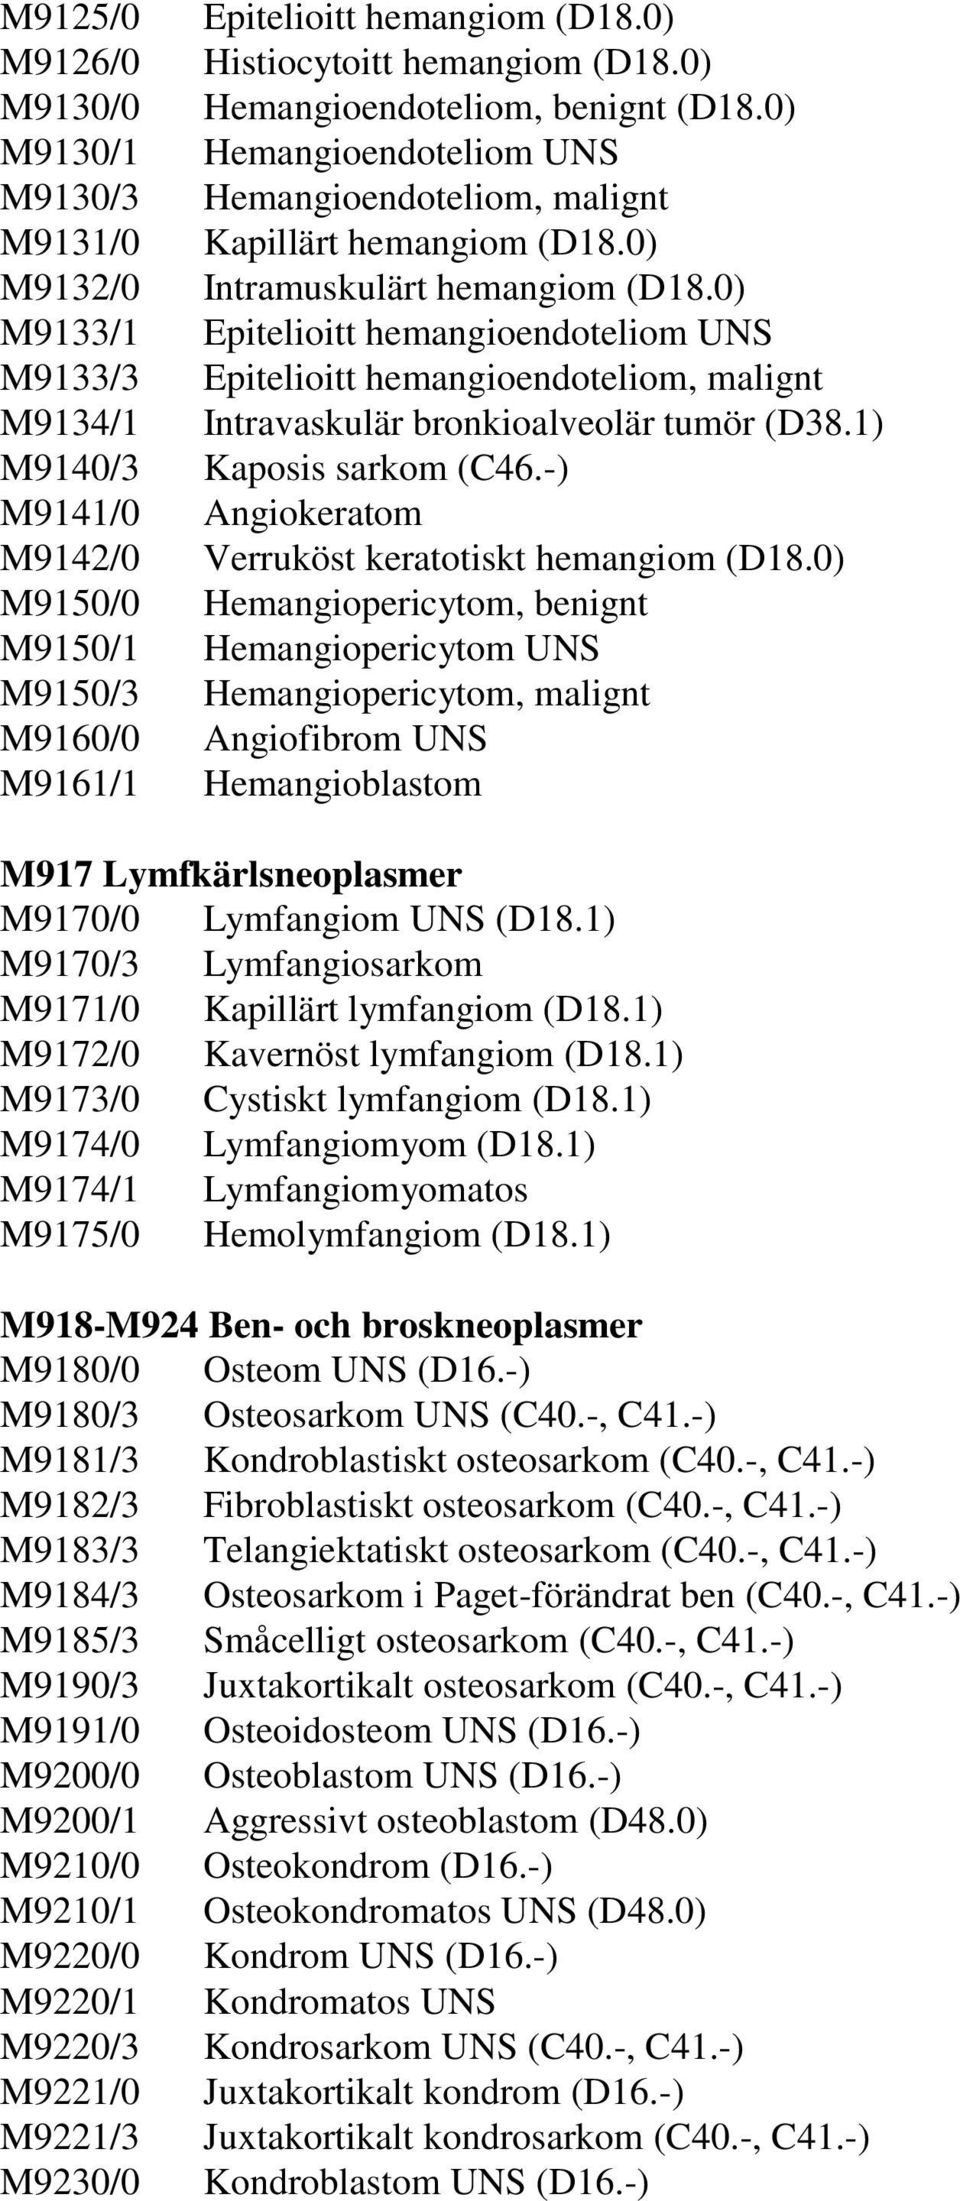 0) M9133/1 Epitelioitt hemangioendoteliom UNS M9133/3 Epitelioitt hemangioendoteliom, malignt M9134/1 Intravaskulär bronkioalveolär tumör (D38.1) M9140/3 Kaposis sarkom (C46.